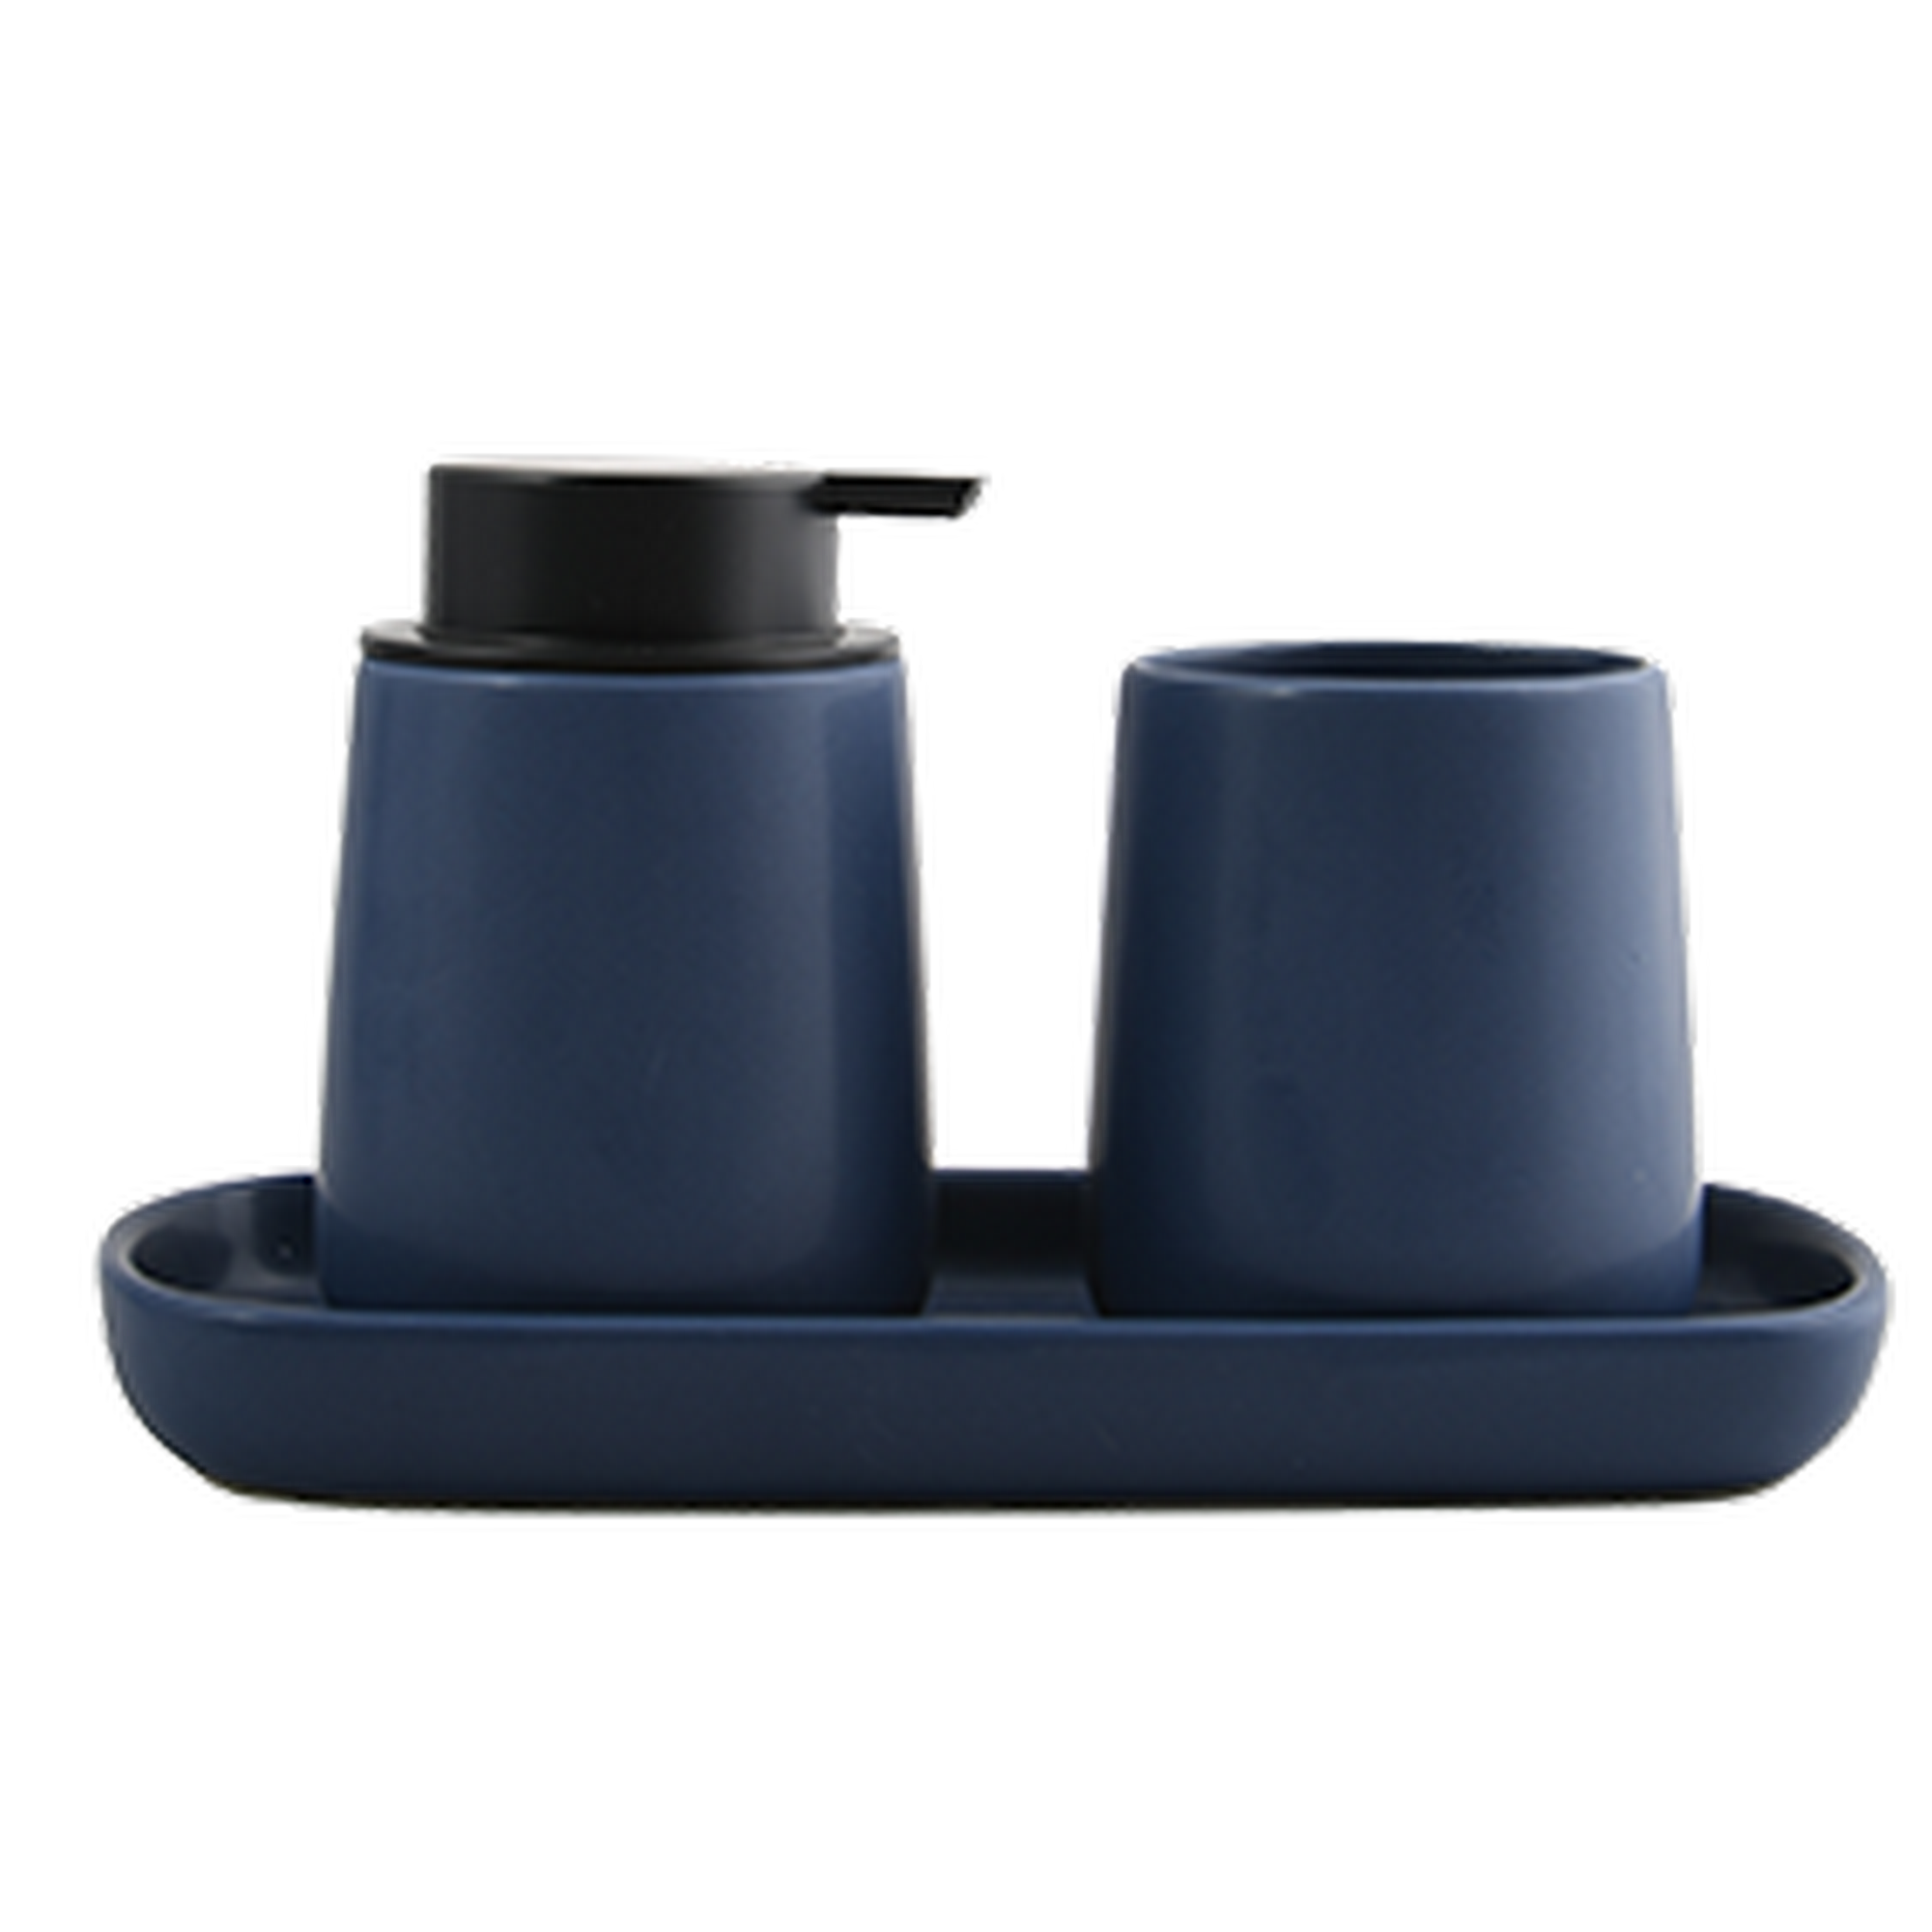 Ablageschale 'Maonie' Keramik dunkelblau 25,7 x 11,5 x 2,8 cm + product picture